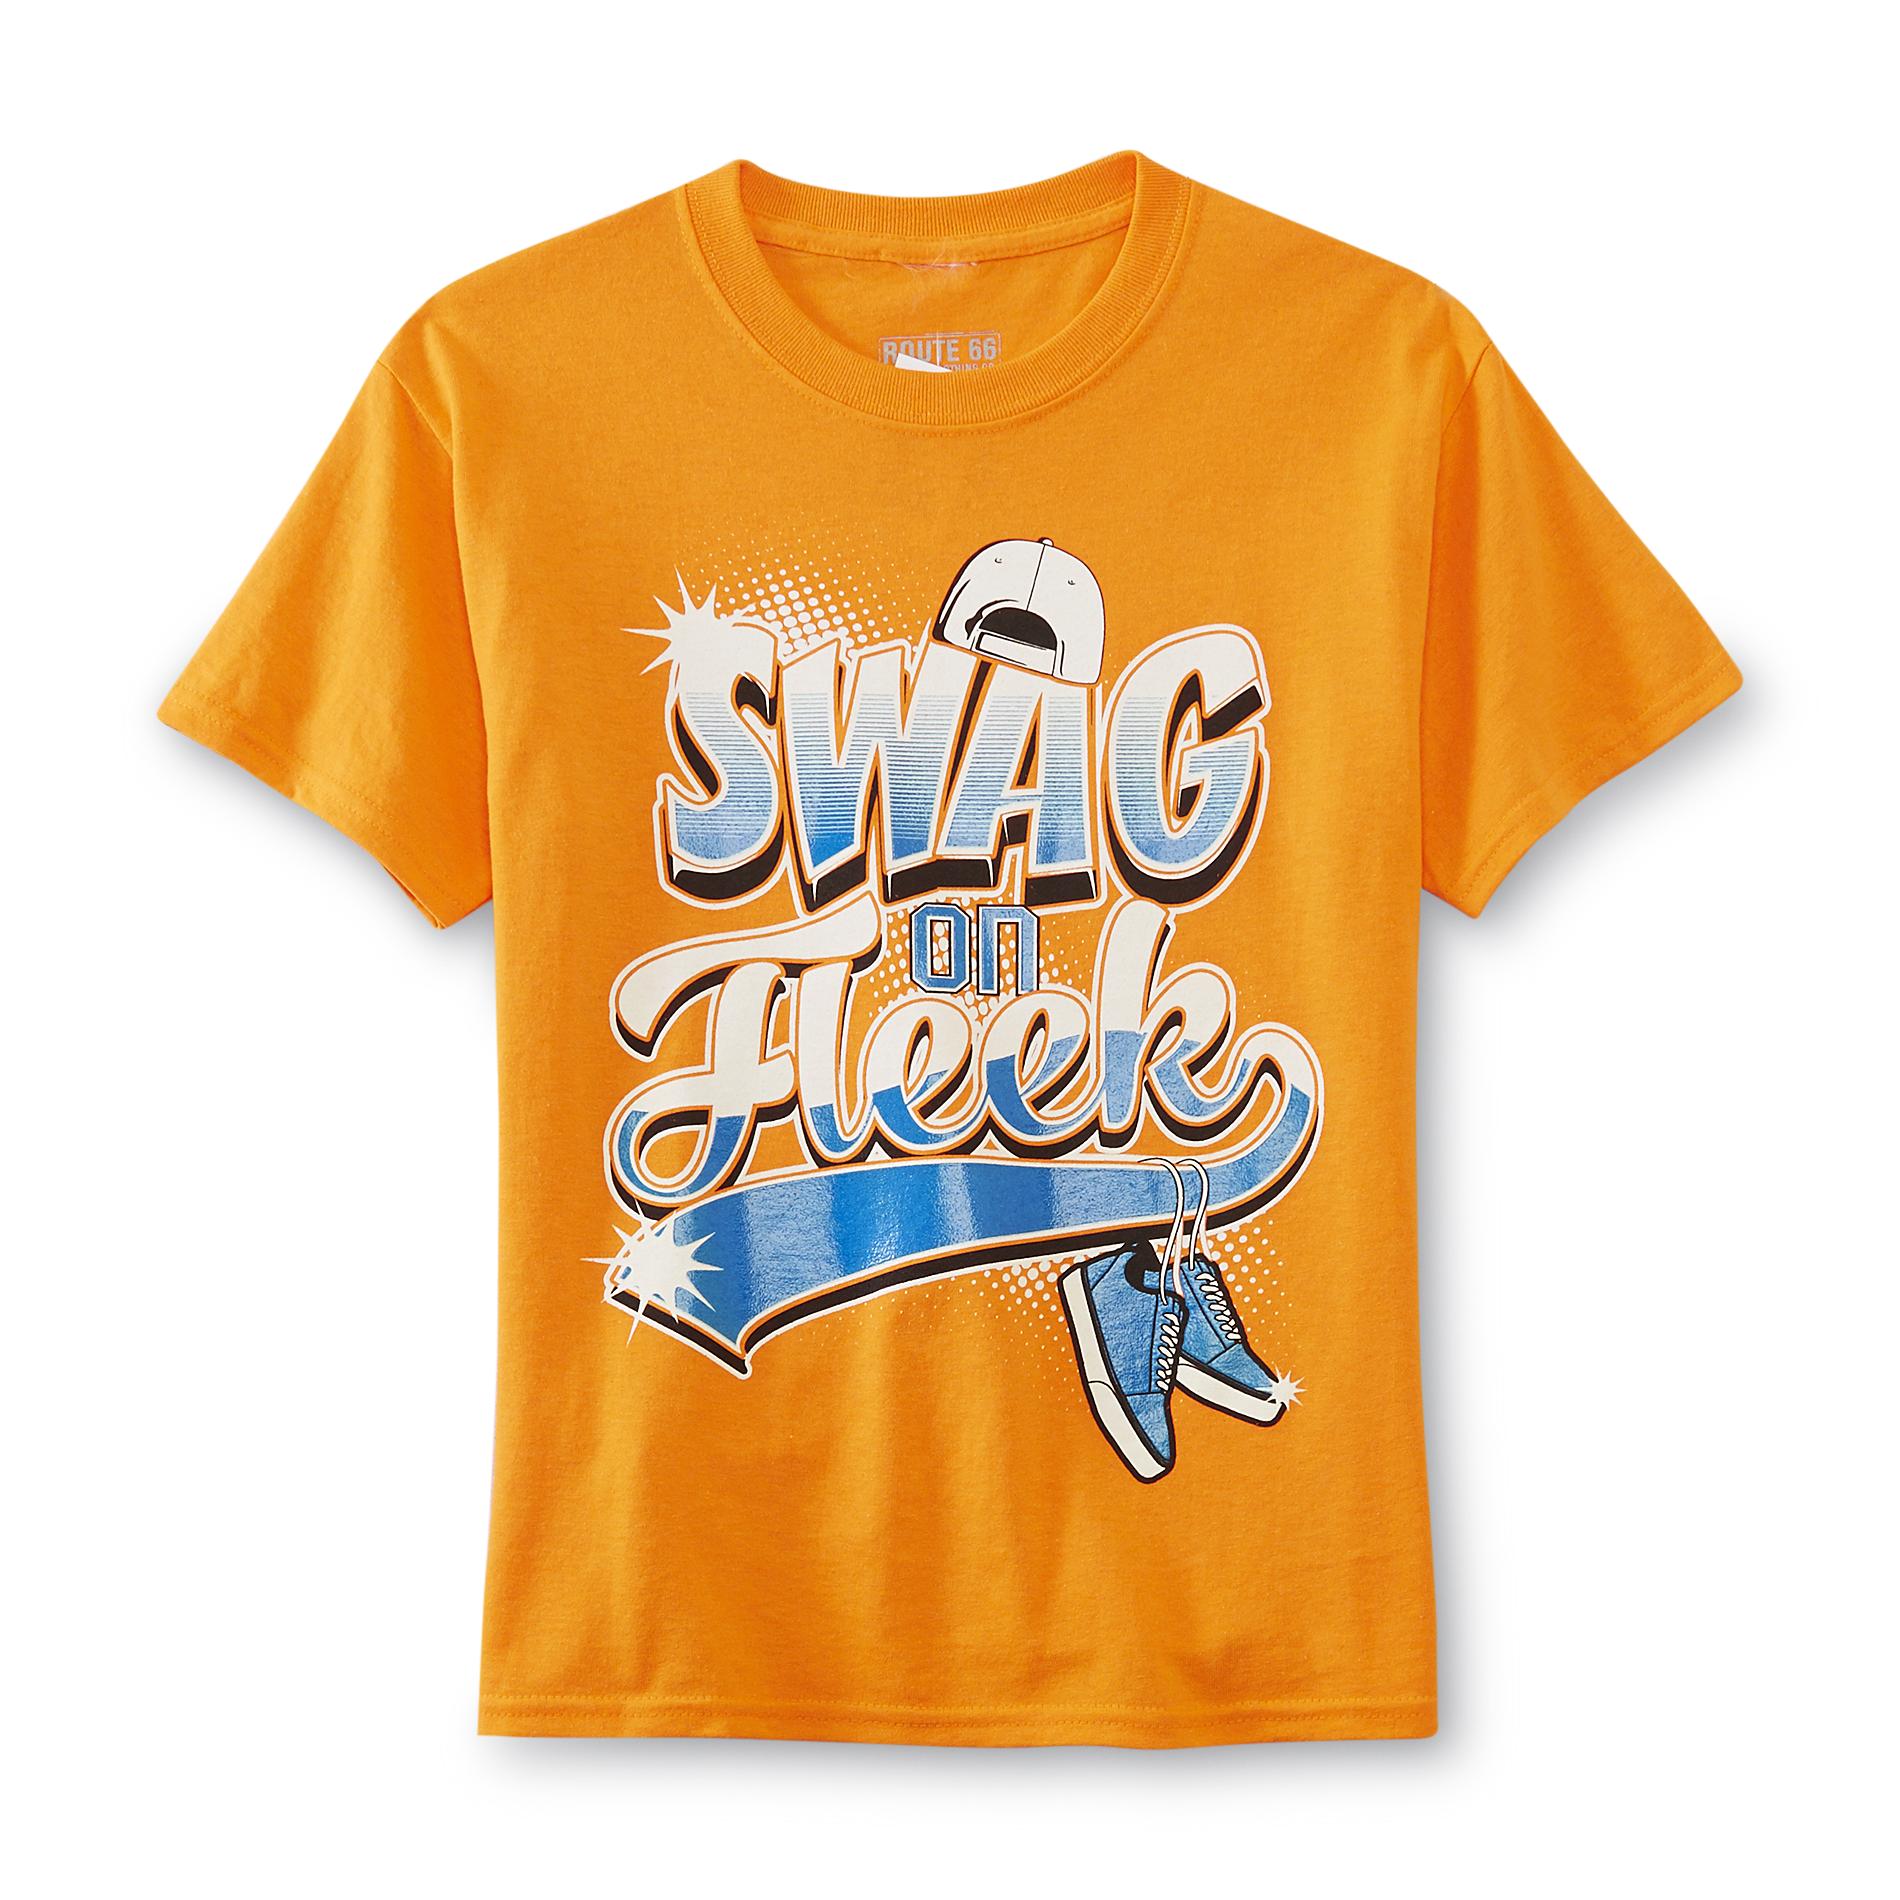 Route 66 Boy's Graphic T-Shirt - On Fleek